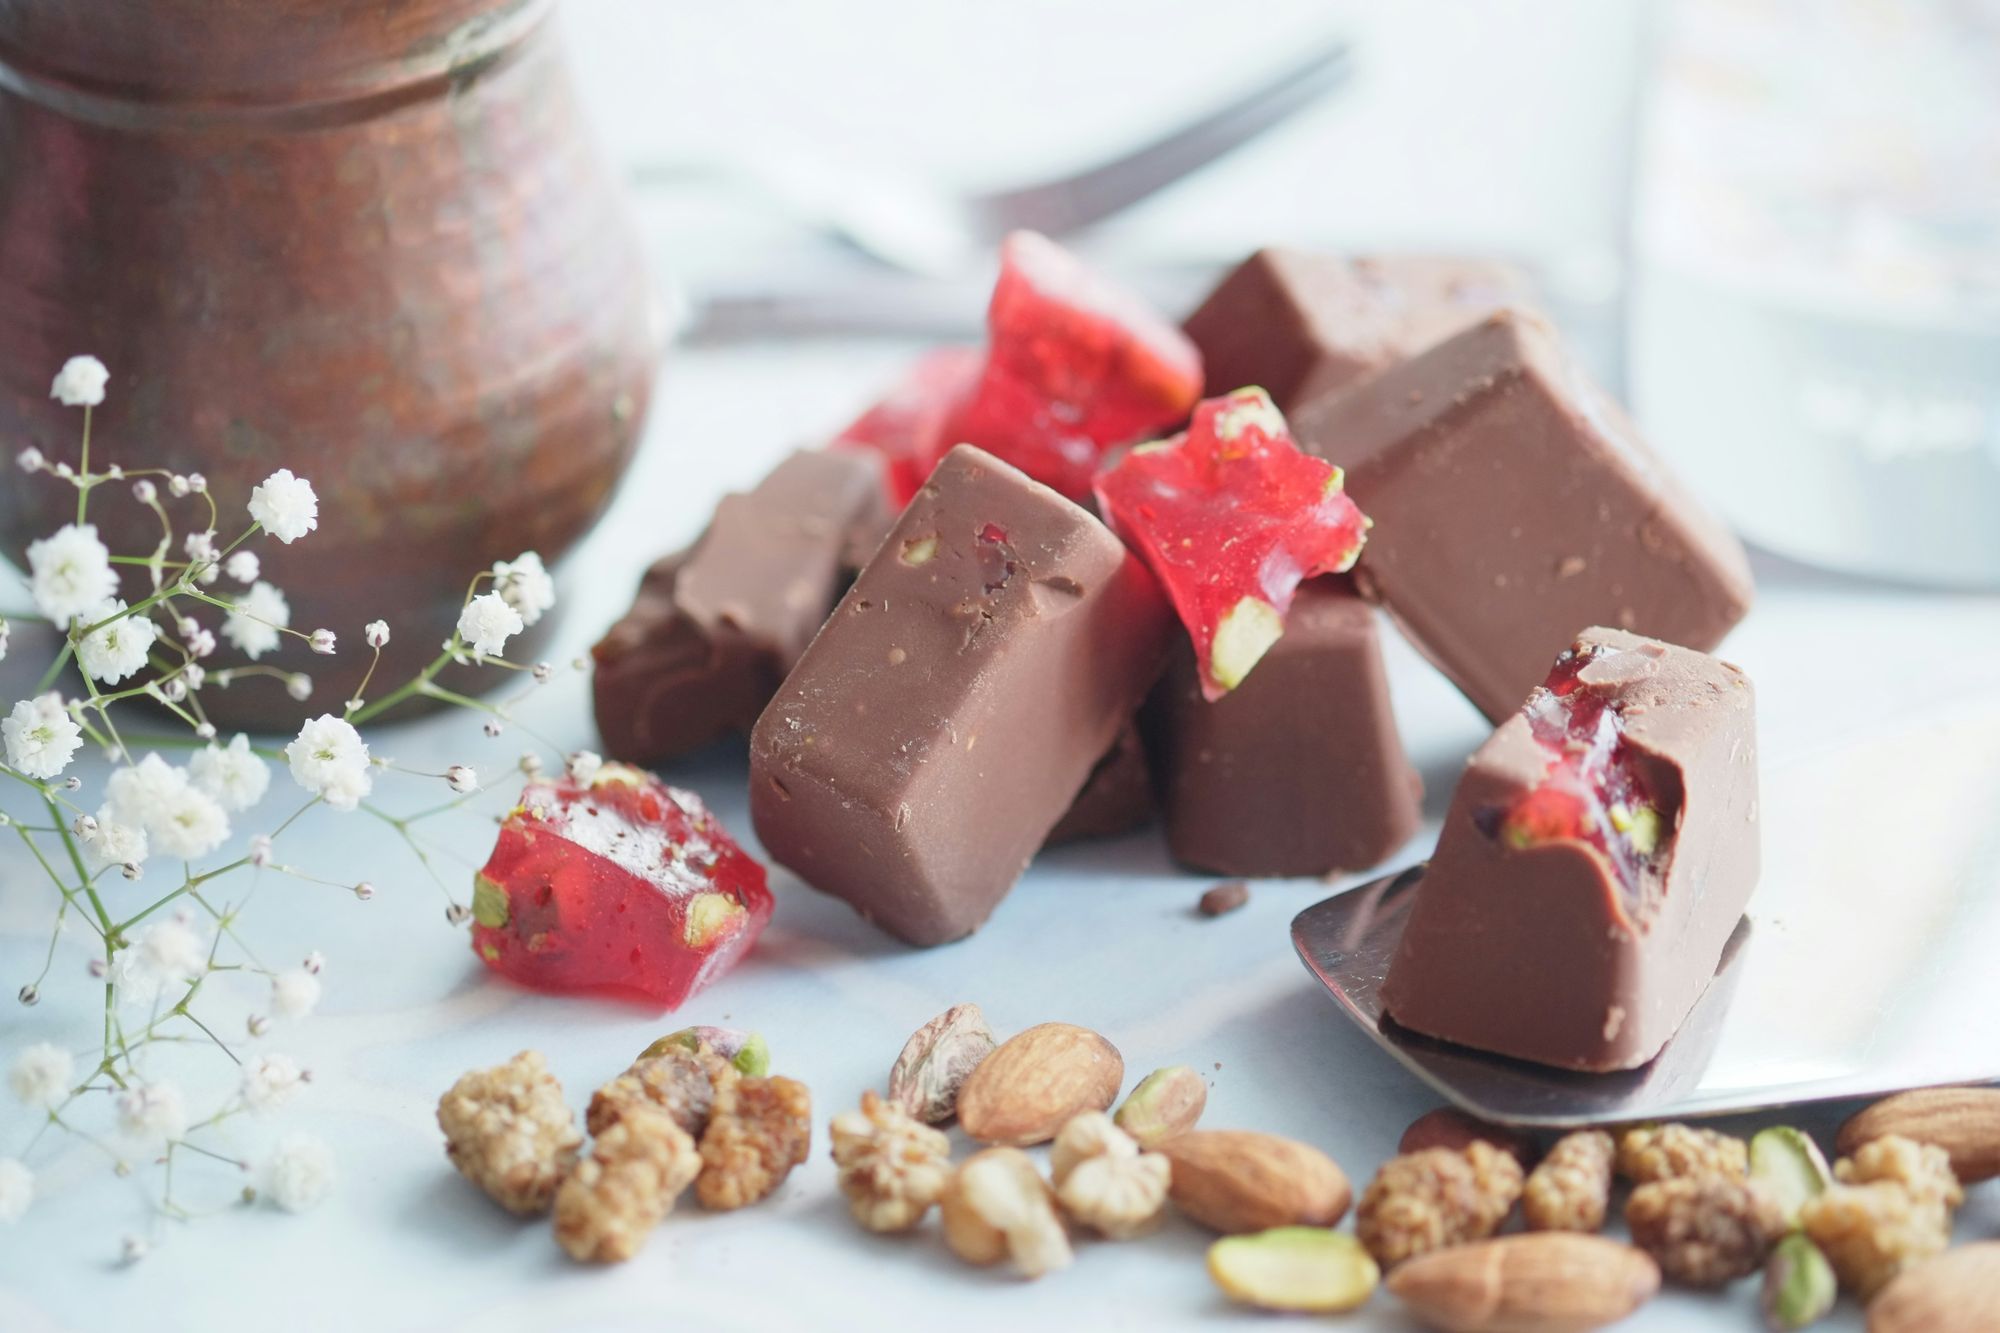 Chocolate may help combat Diabetes